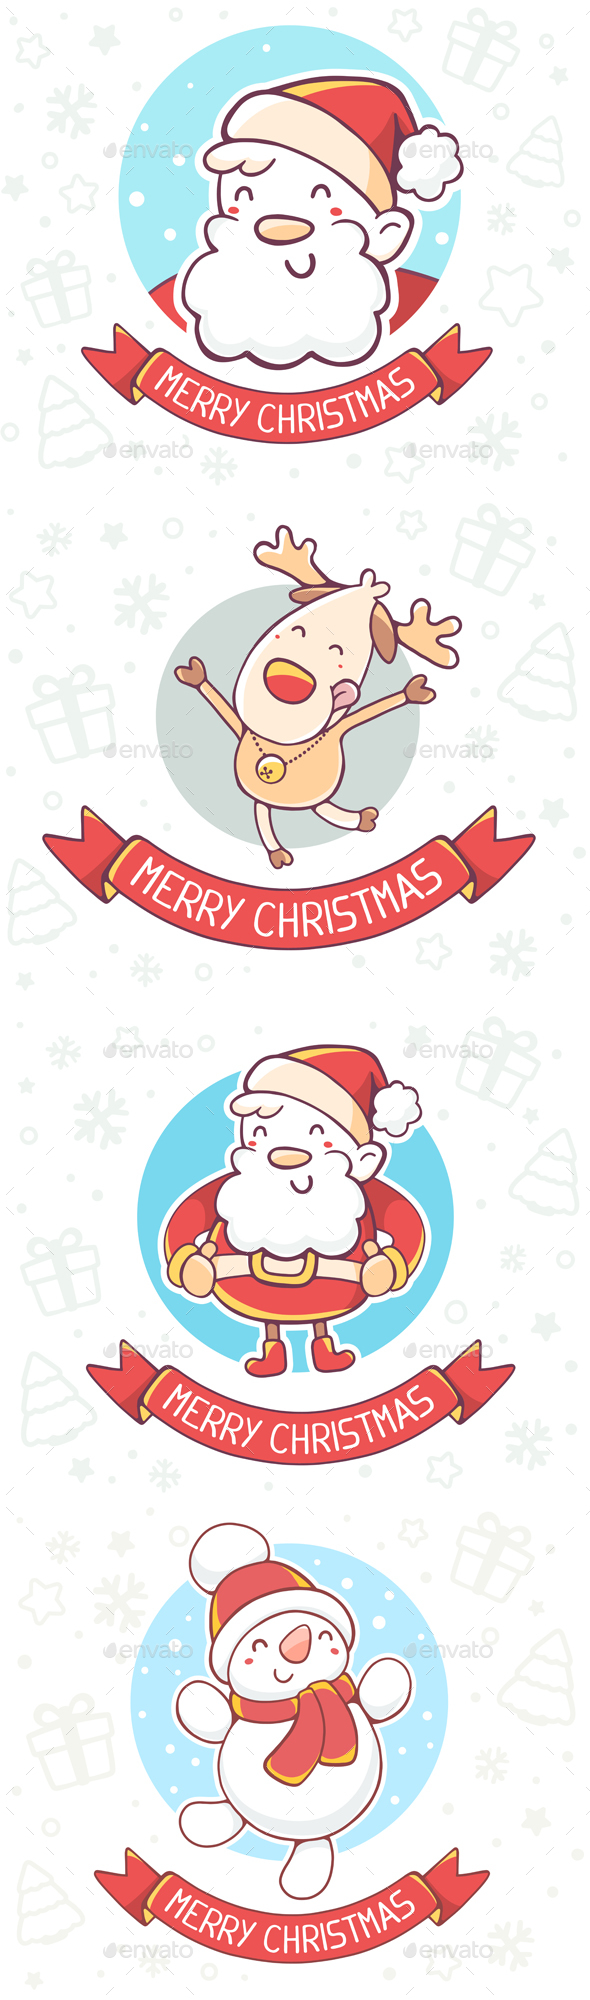 Snowman, Santa Claus and Christmas Reindeer